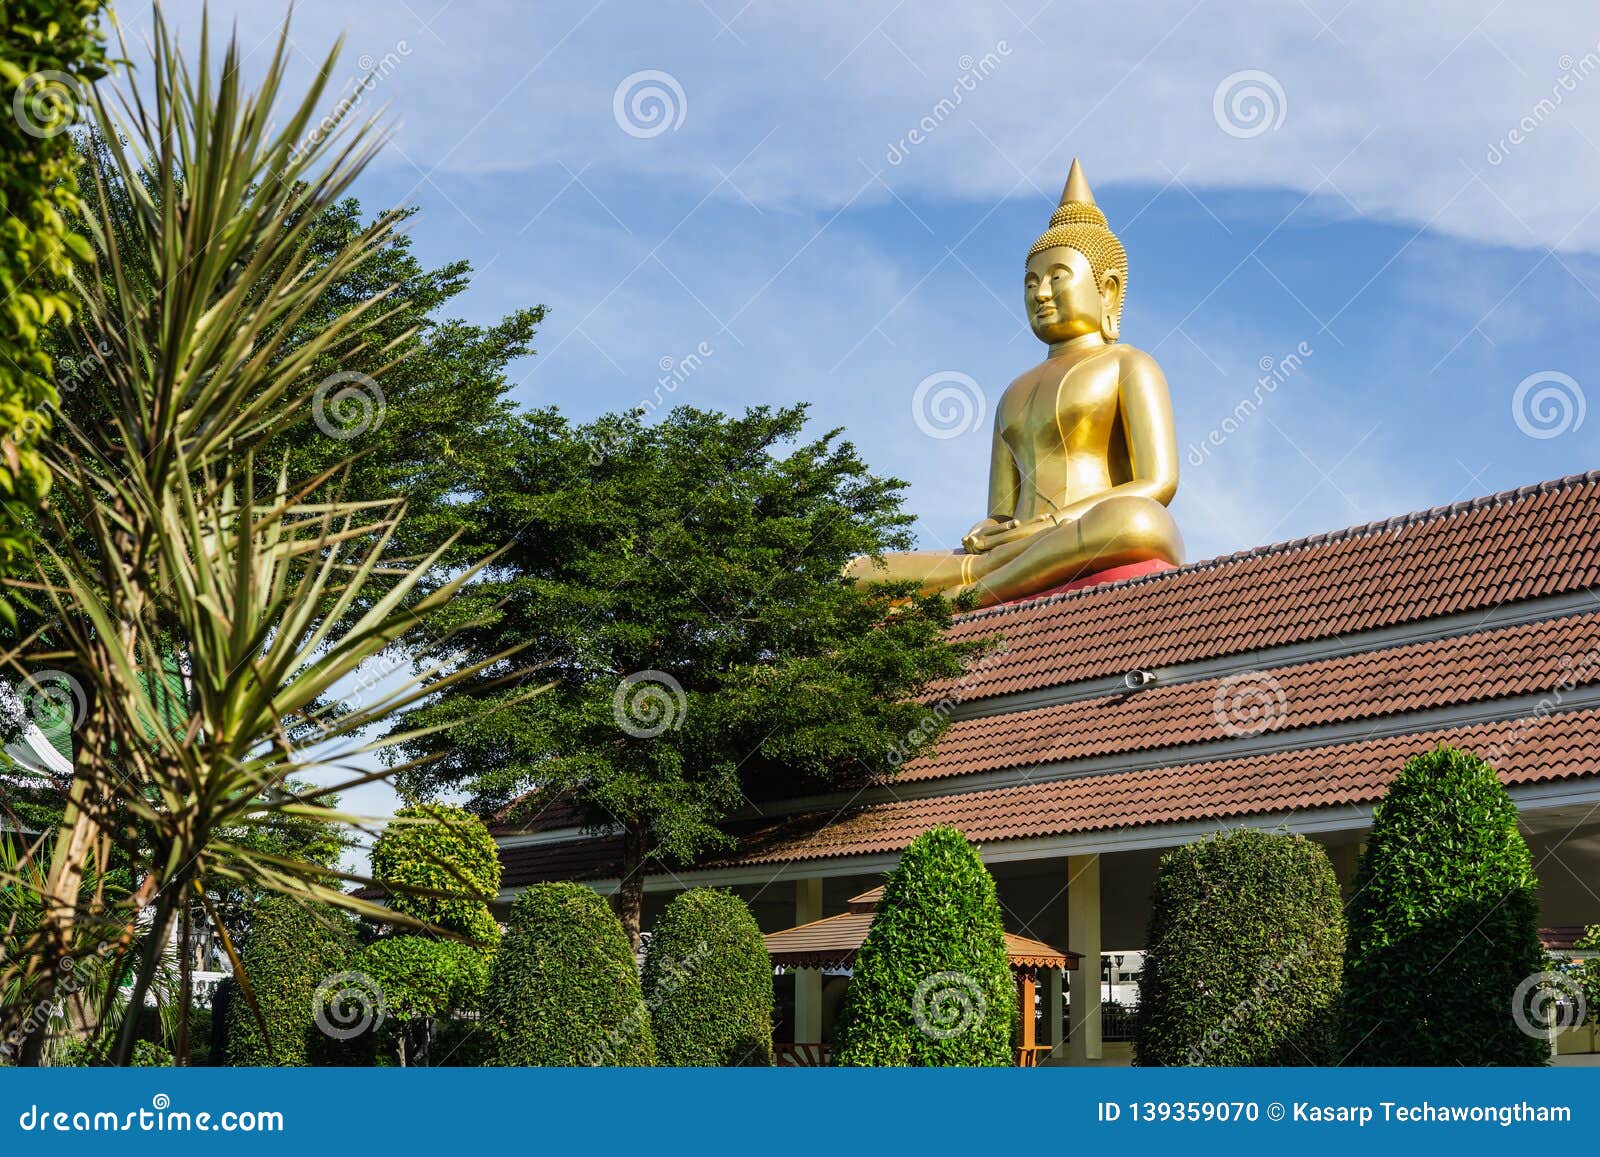 Pathum Thani Thailand January 2 19 Large Golden Buddha Statue In Wat Bot Temple Pathum Thani Thailand Editorial Image Image Of Asian Spirituality